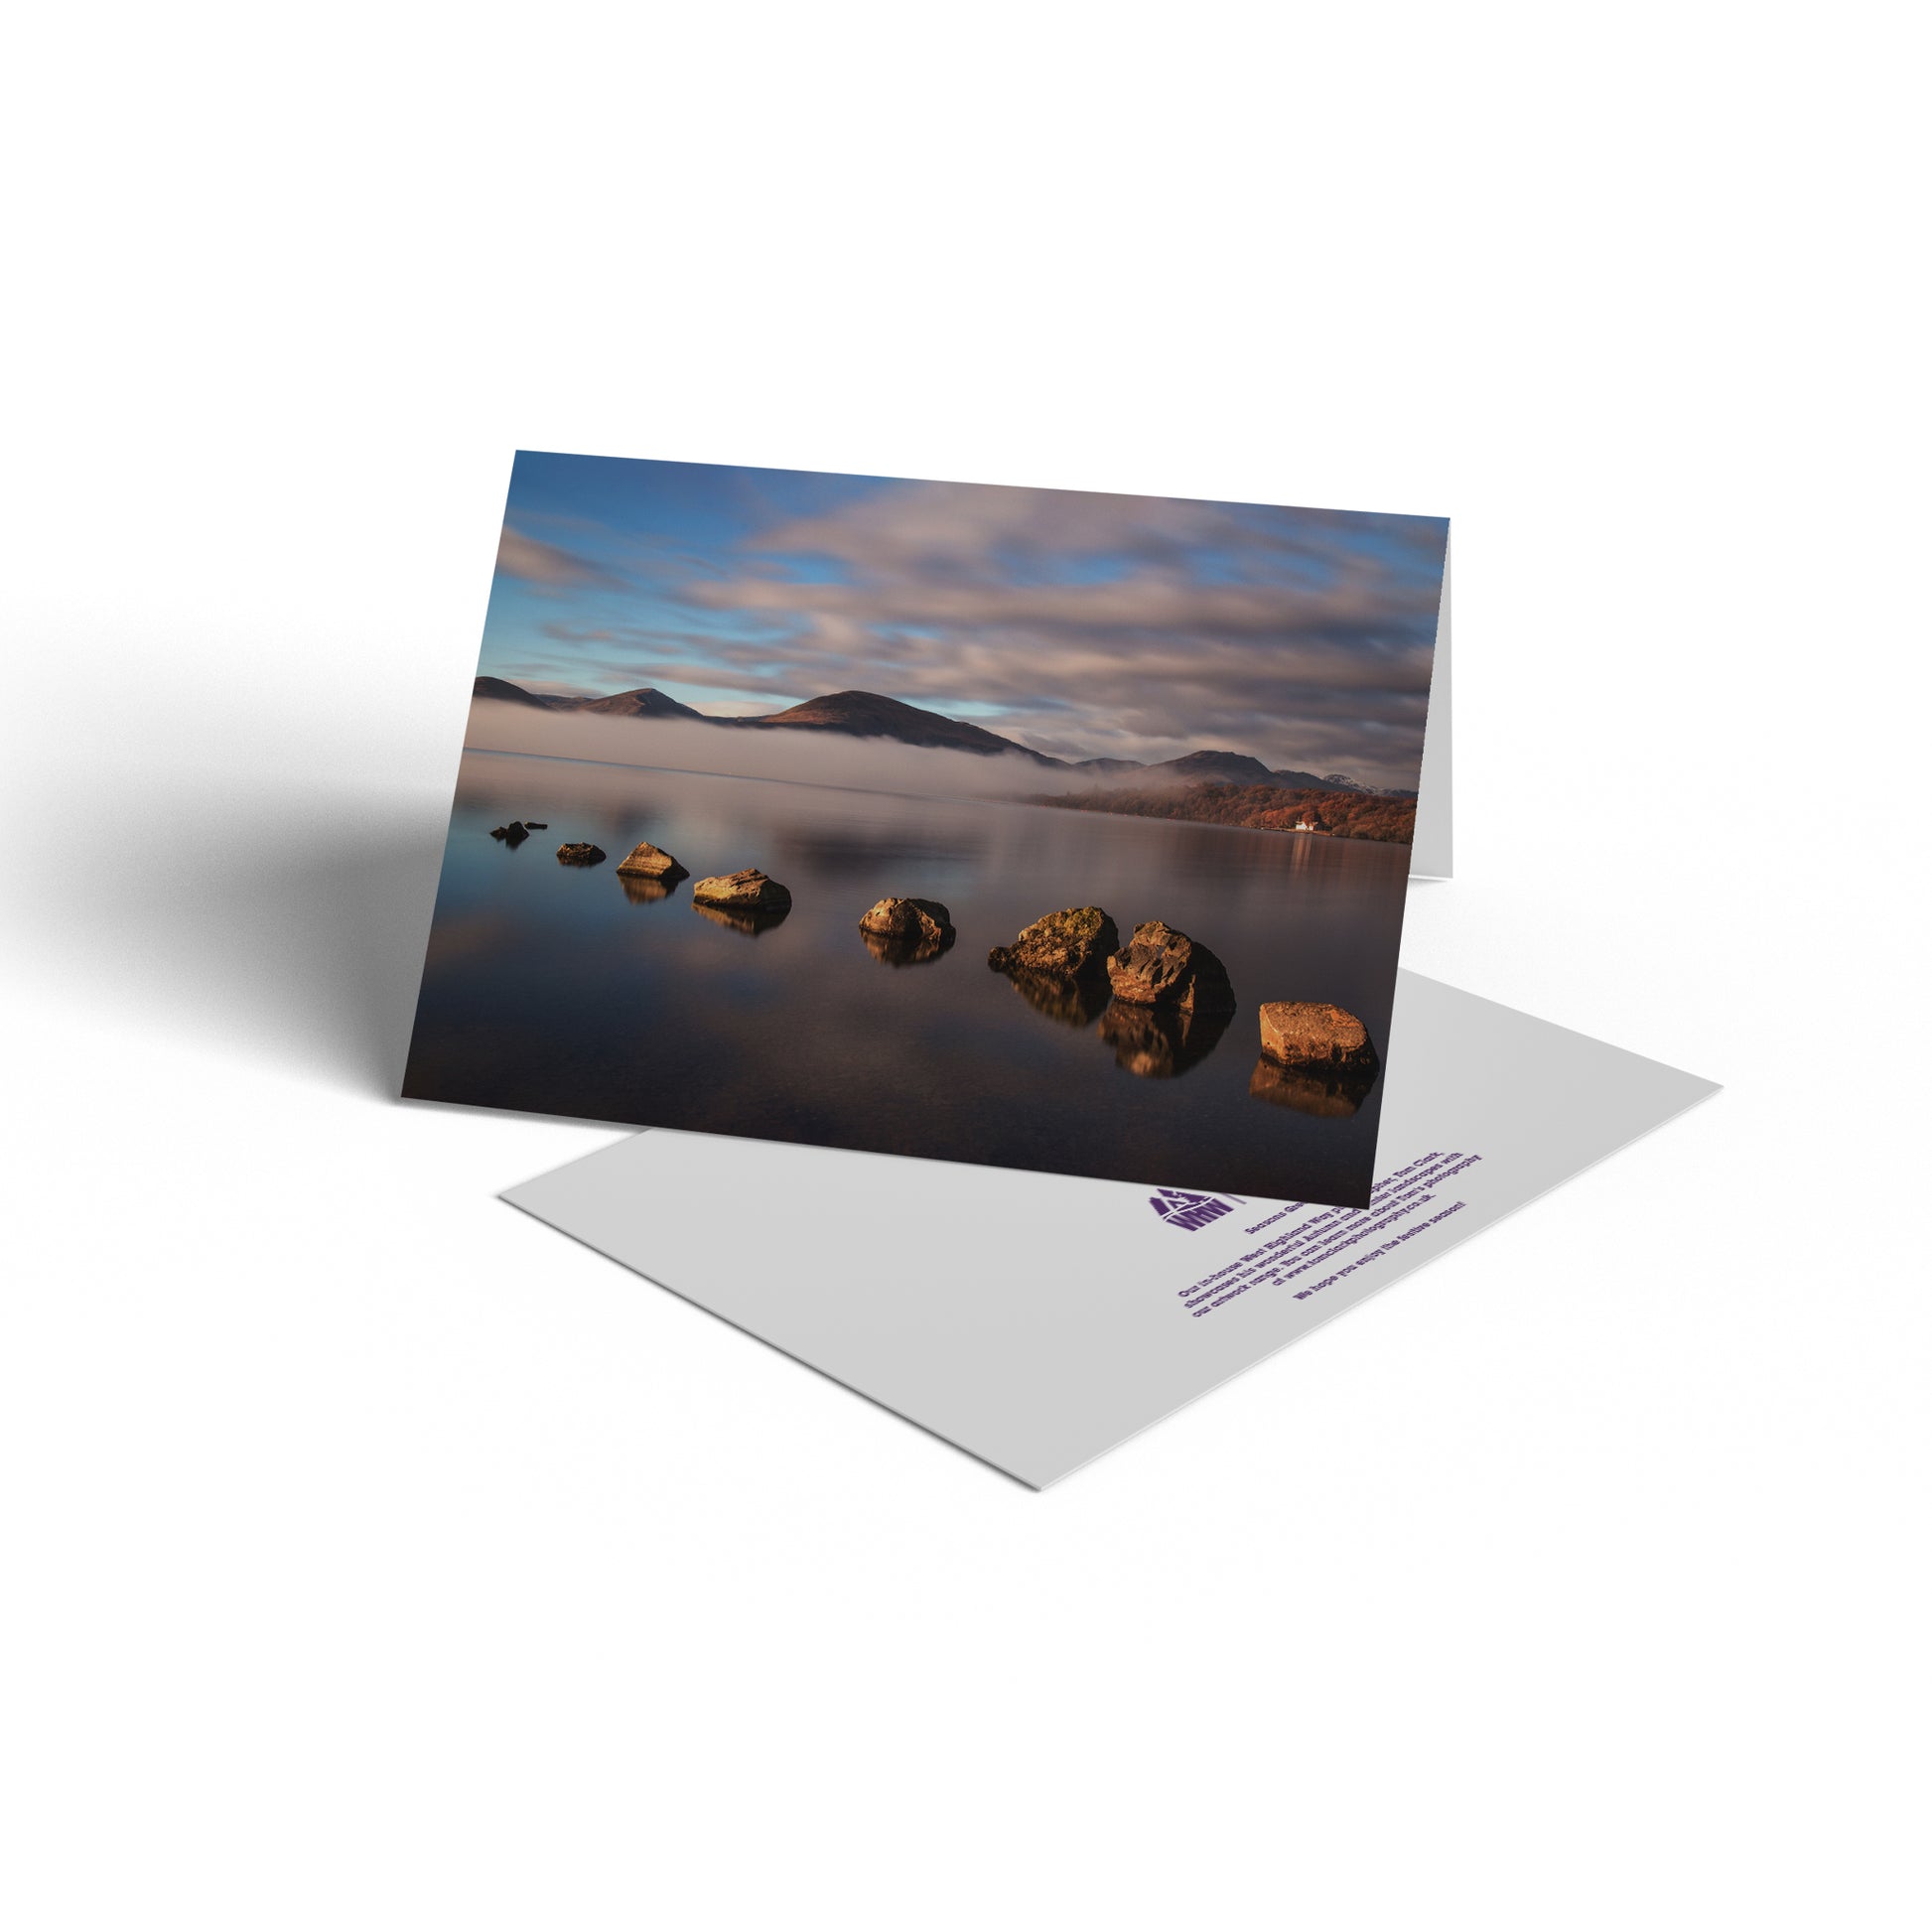 West highland Way greetings card with photo of Milarrochy Bay, Balmaha, Loch Lomond